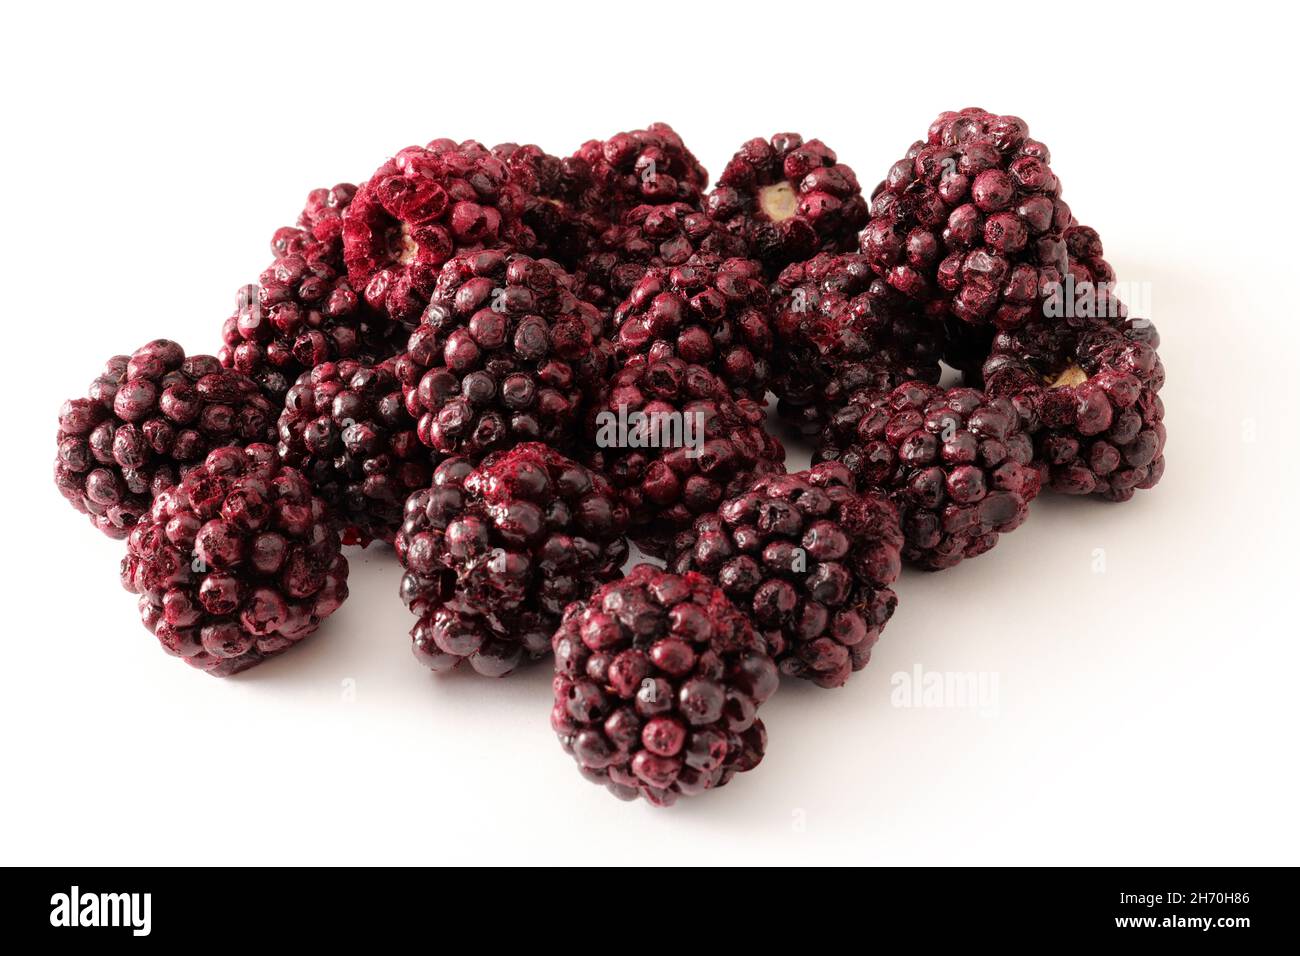 congele la fruta entera de blackberry seca Foto de stock